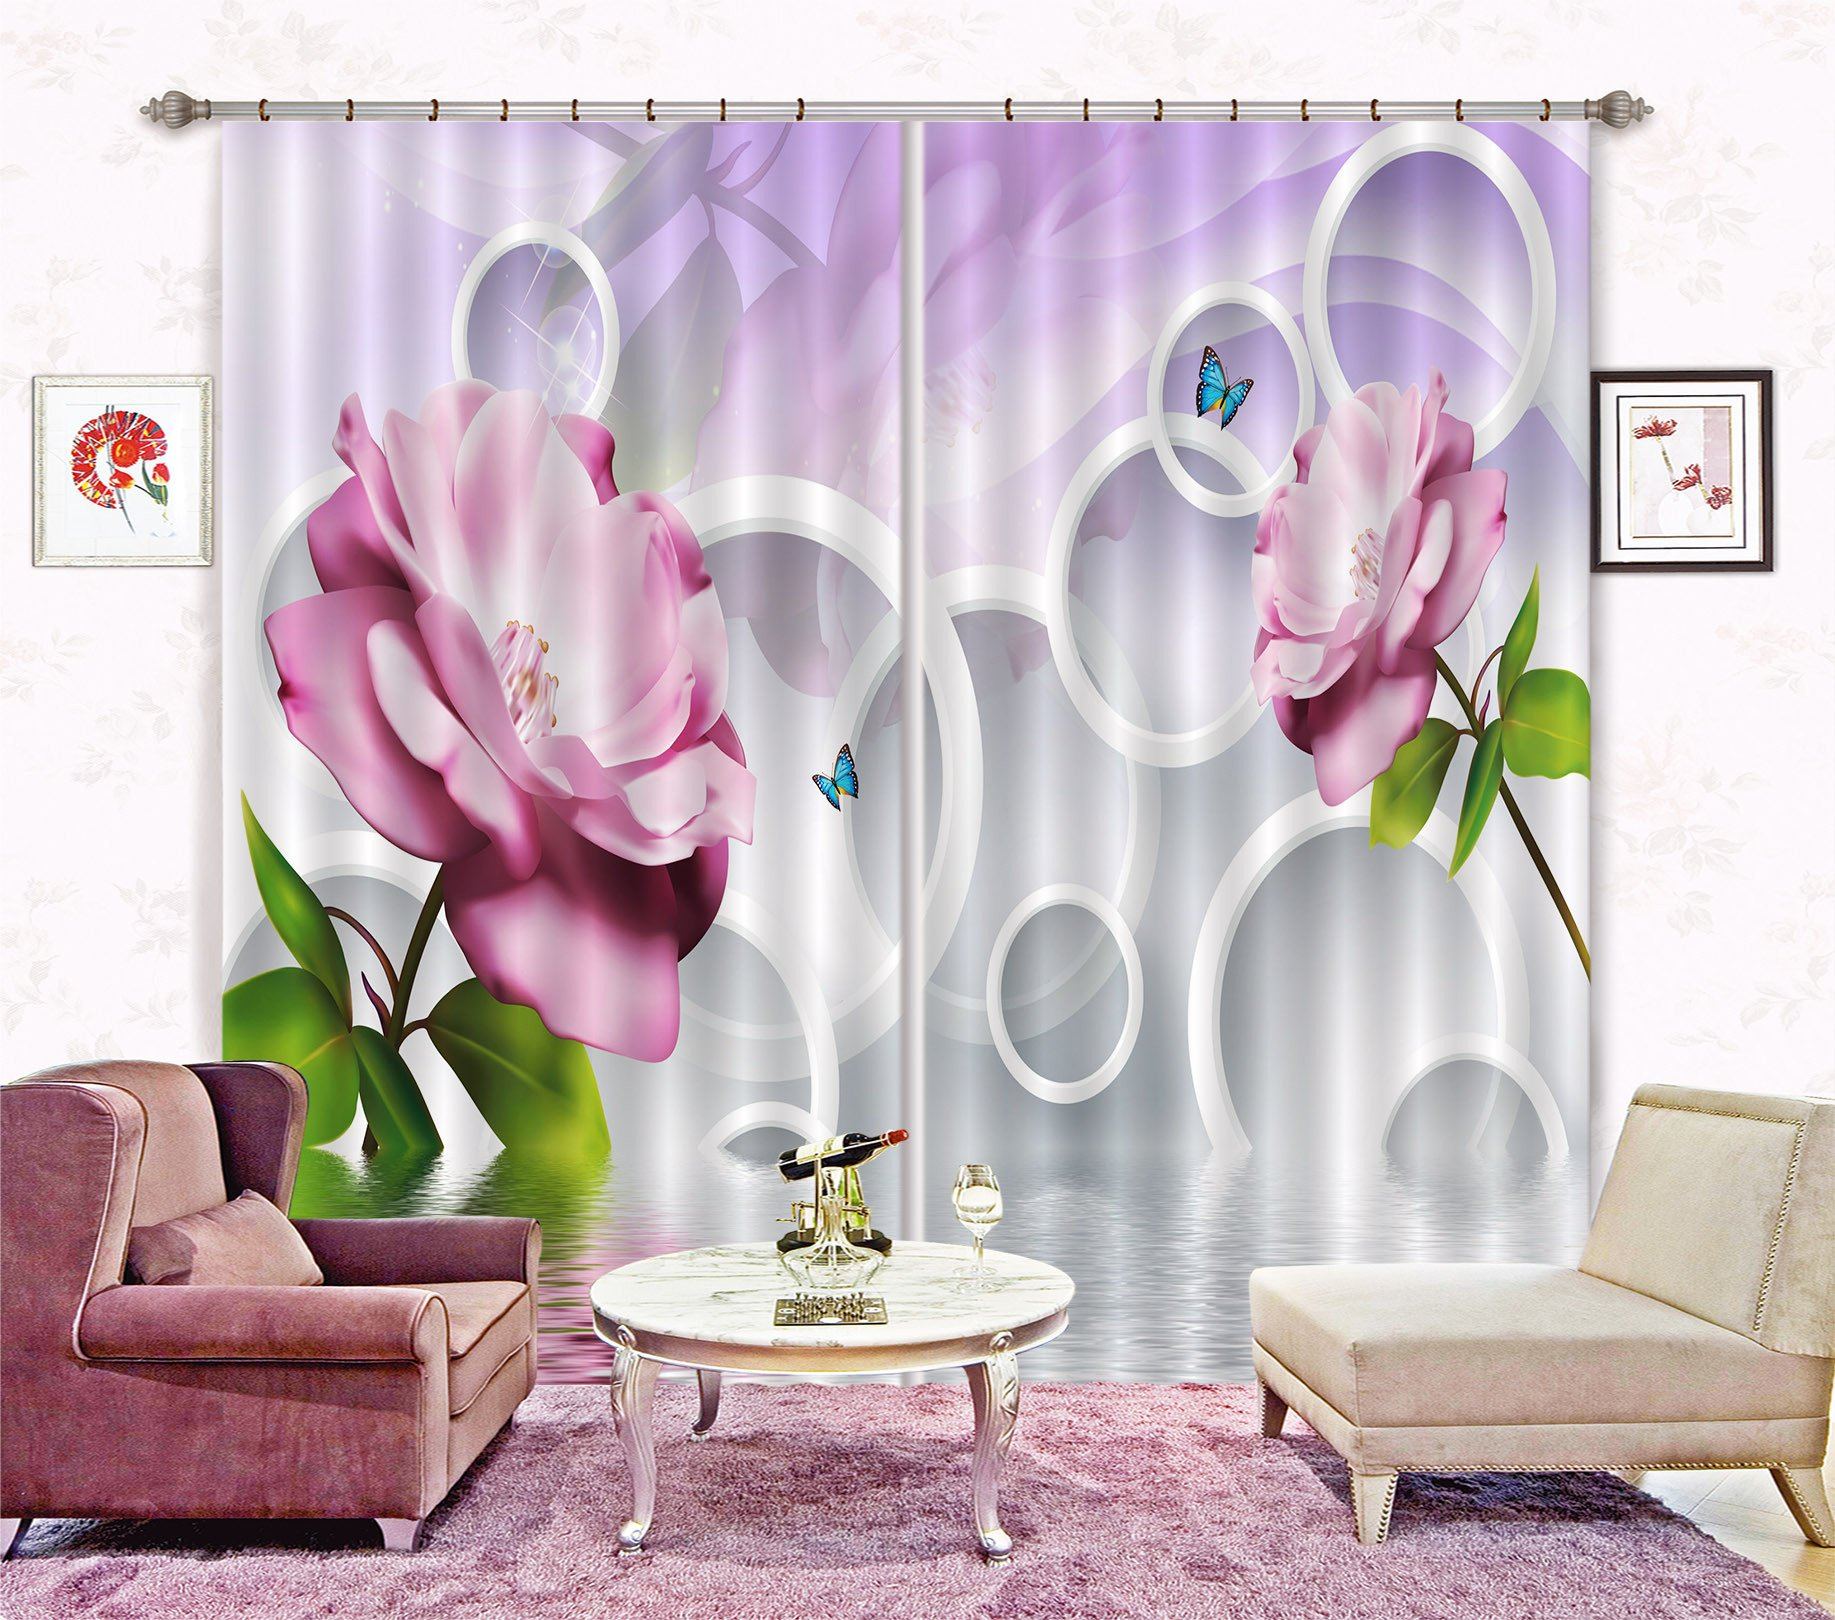 3D Flowers And Rings 298 Curtains Drapes Wallpaper AJ Wallpaper 